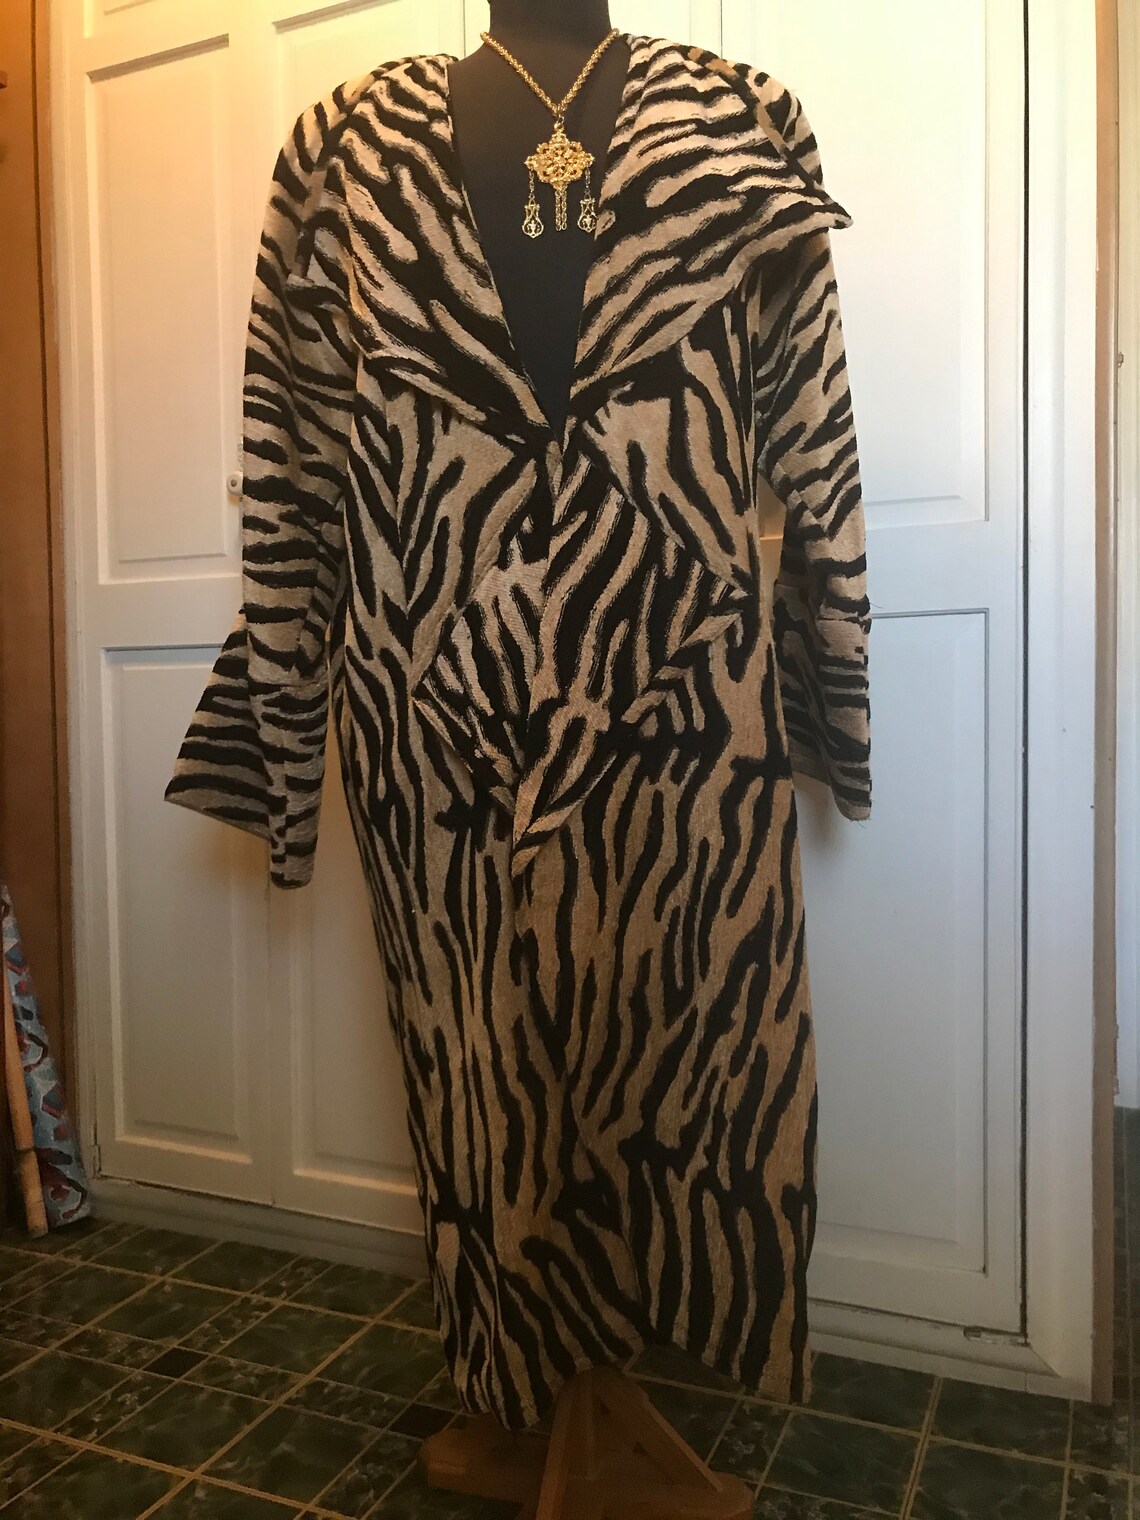 Retro Tiger Striped Jacket Coat/Animal Print/1980s/Pimp | Etsy